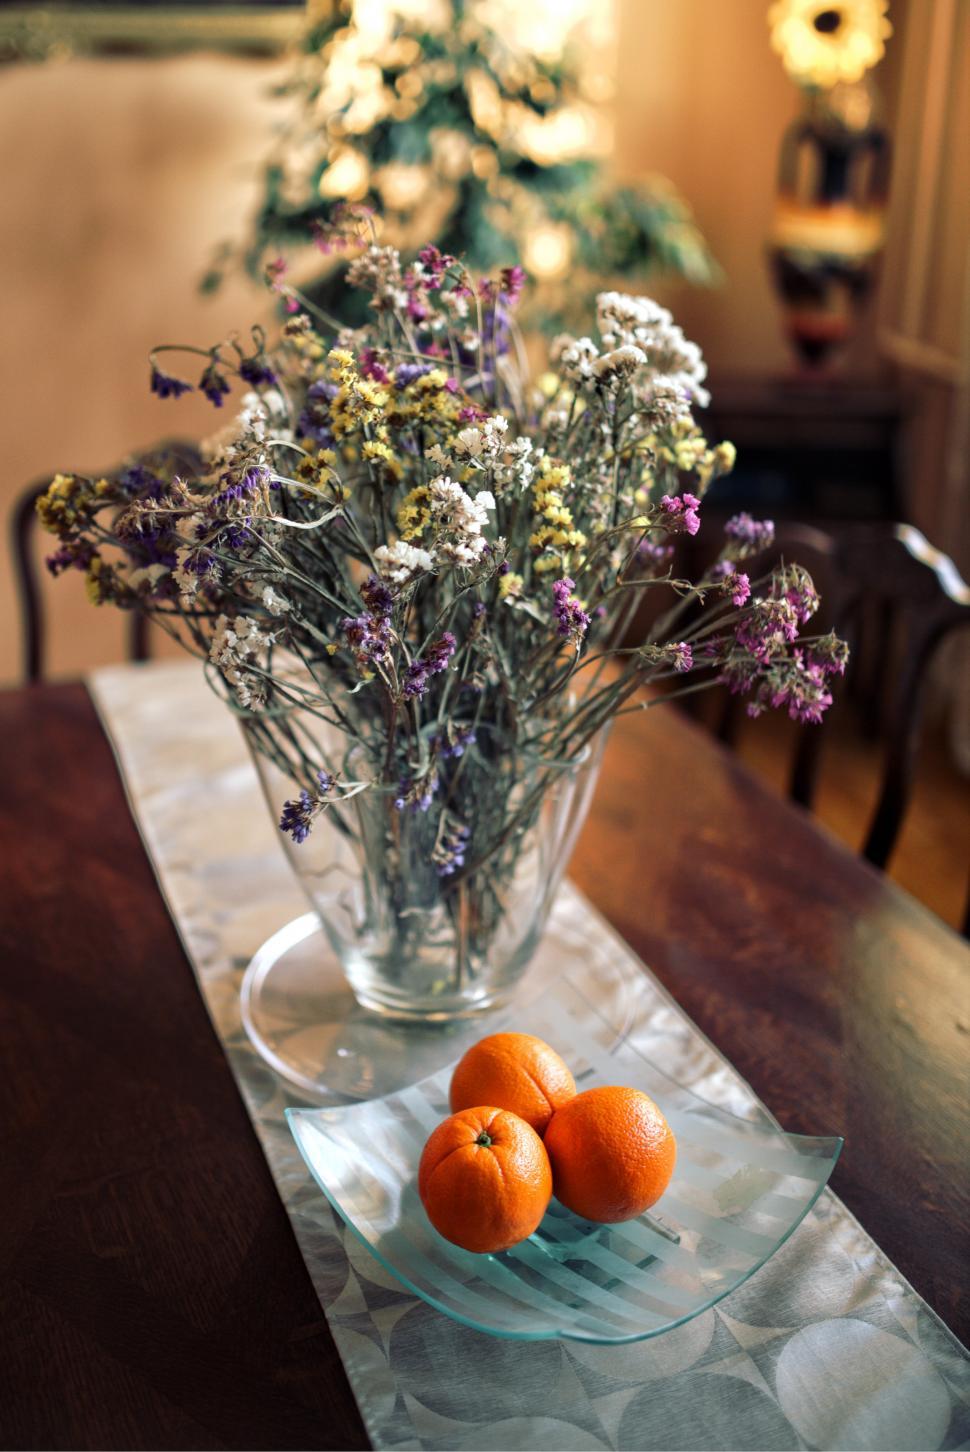 Free Image of Decor Flower Interior centerpiece flowers fruit oranges table 